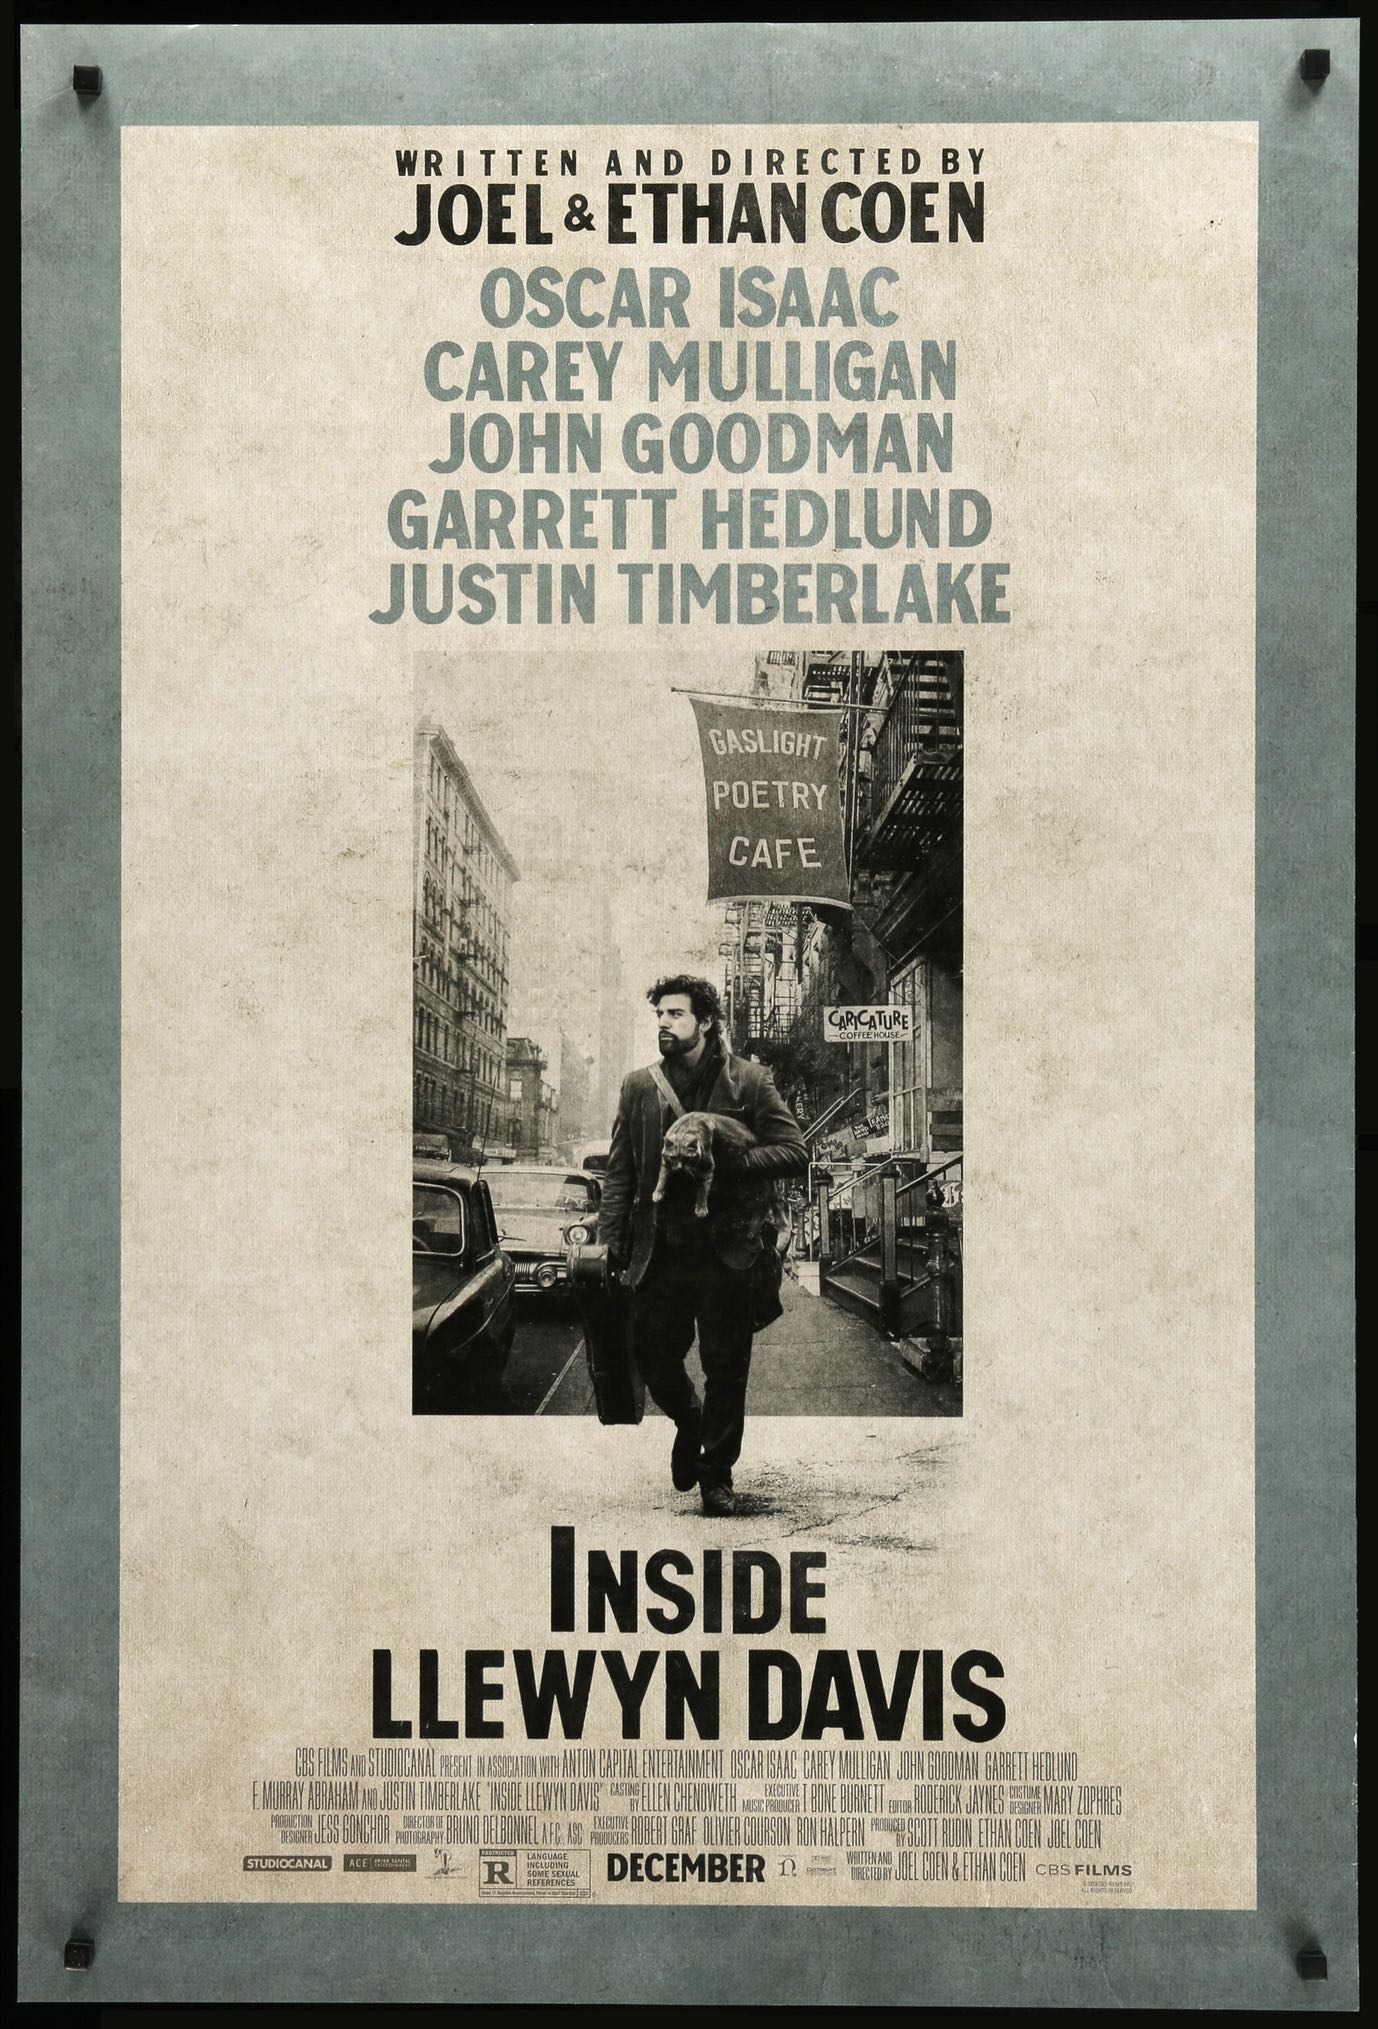 Inside Llewyn Davis (2013) original movie poster for sale at Original Film Art